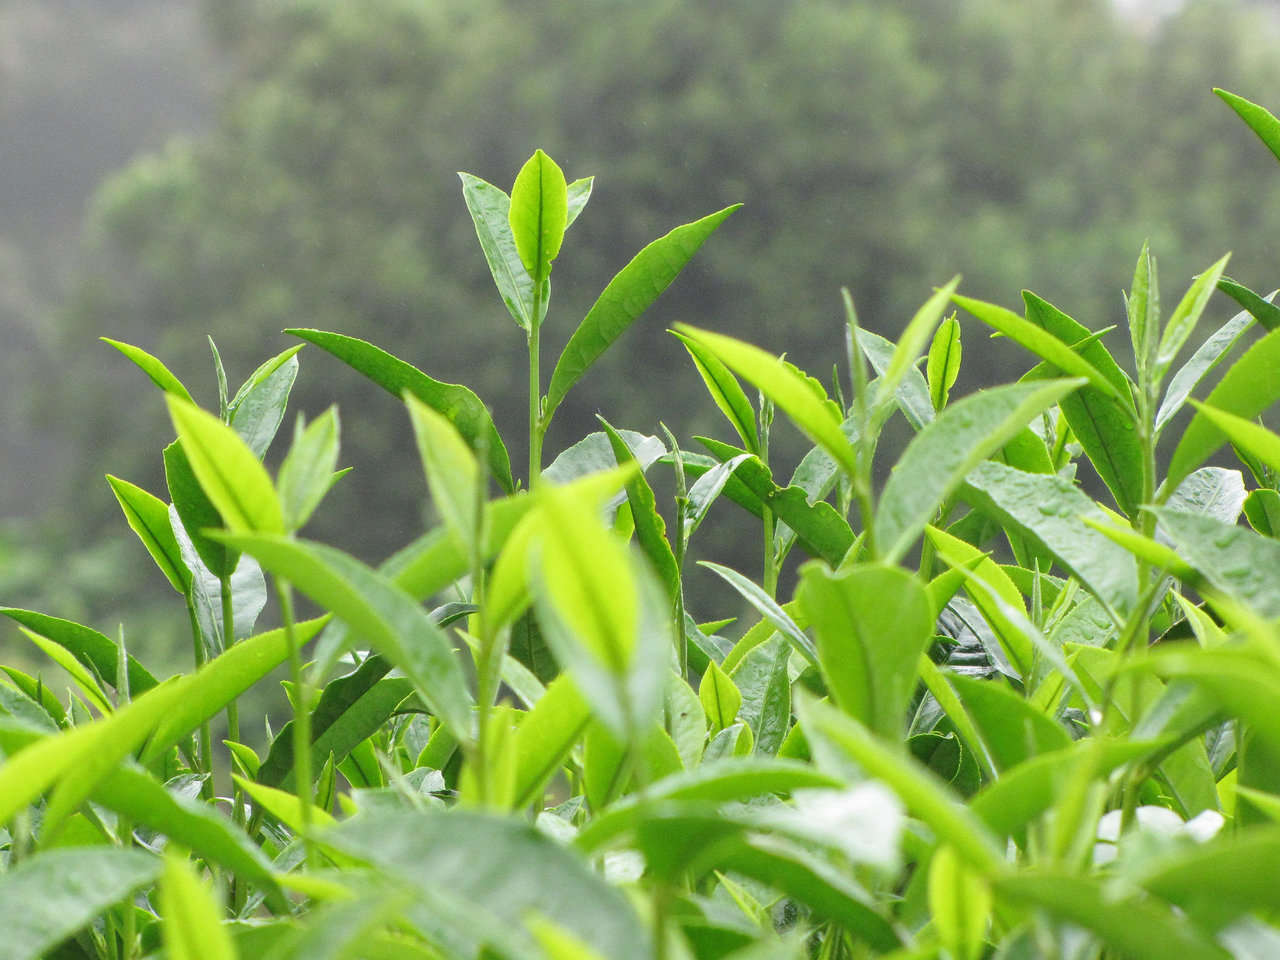 Tea Leaves and Shoots, Hawaii RateTea Images